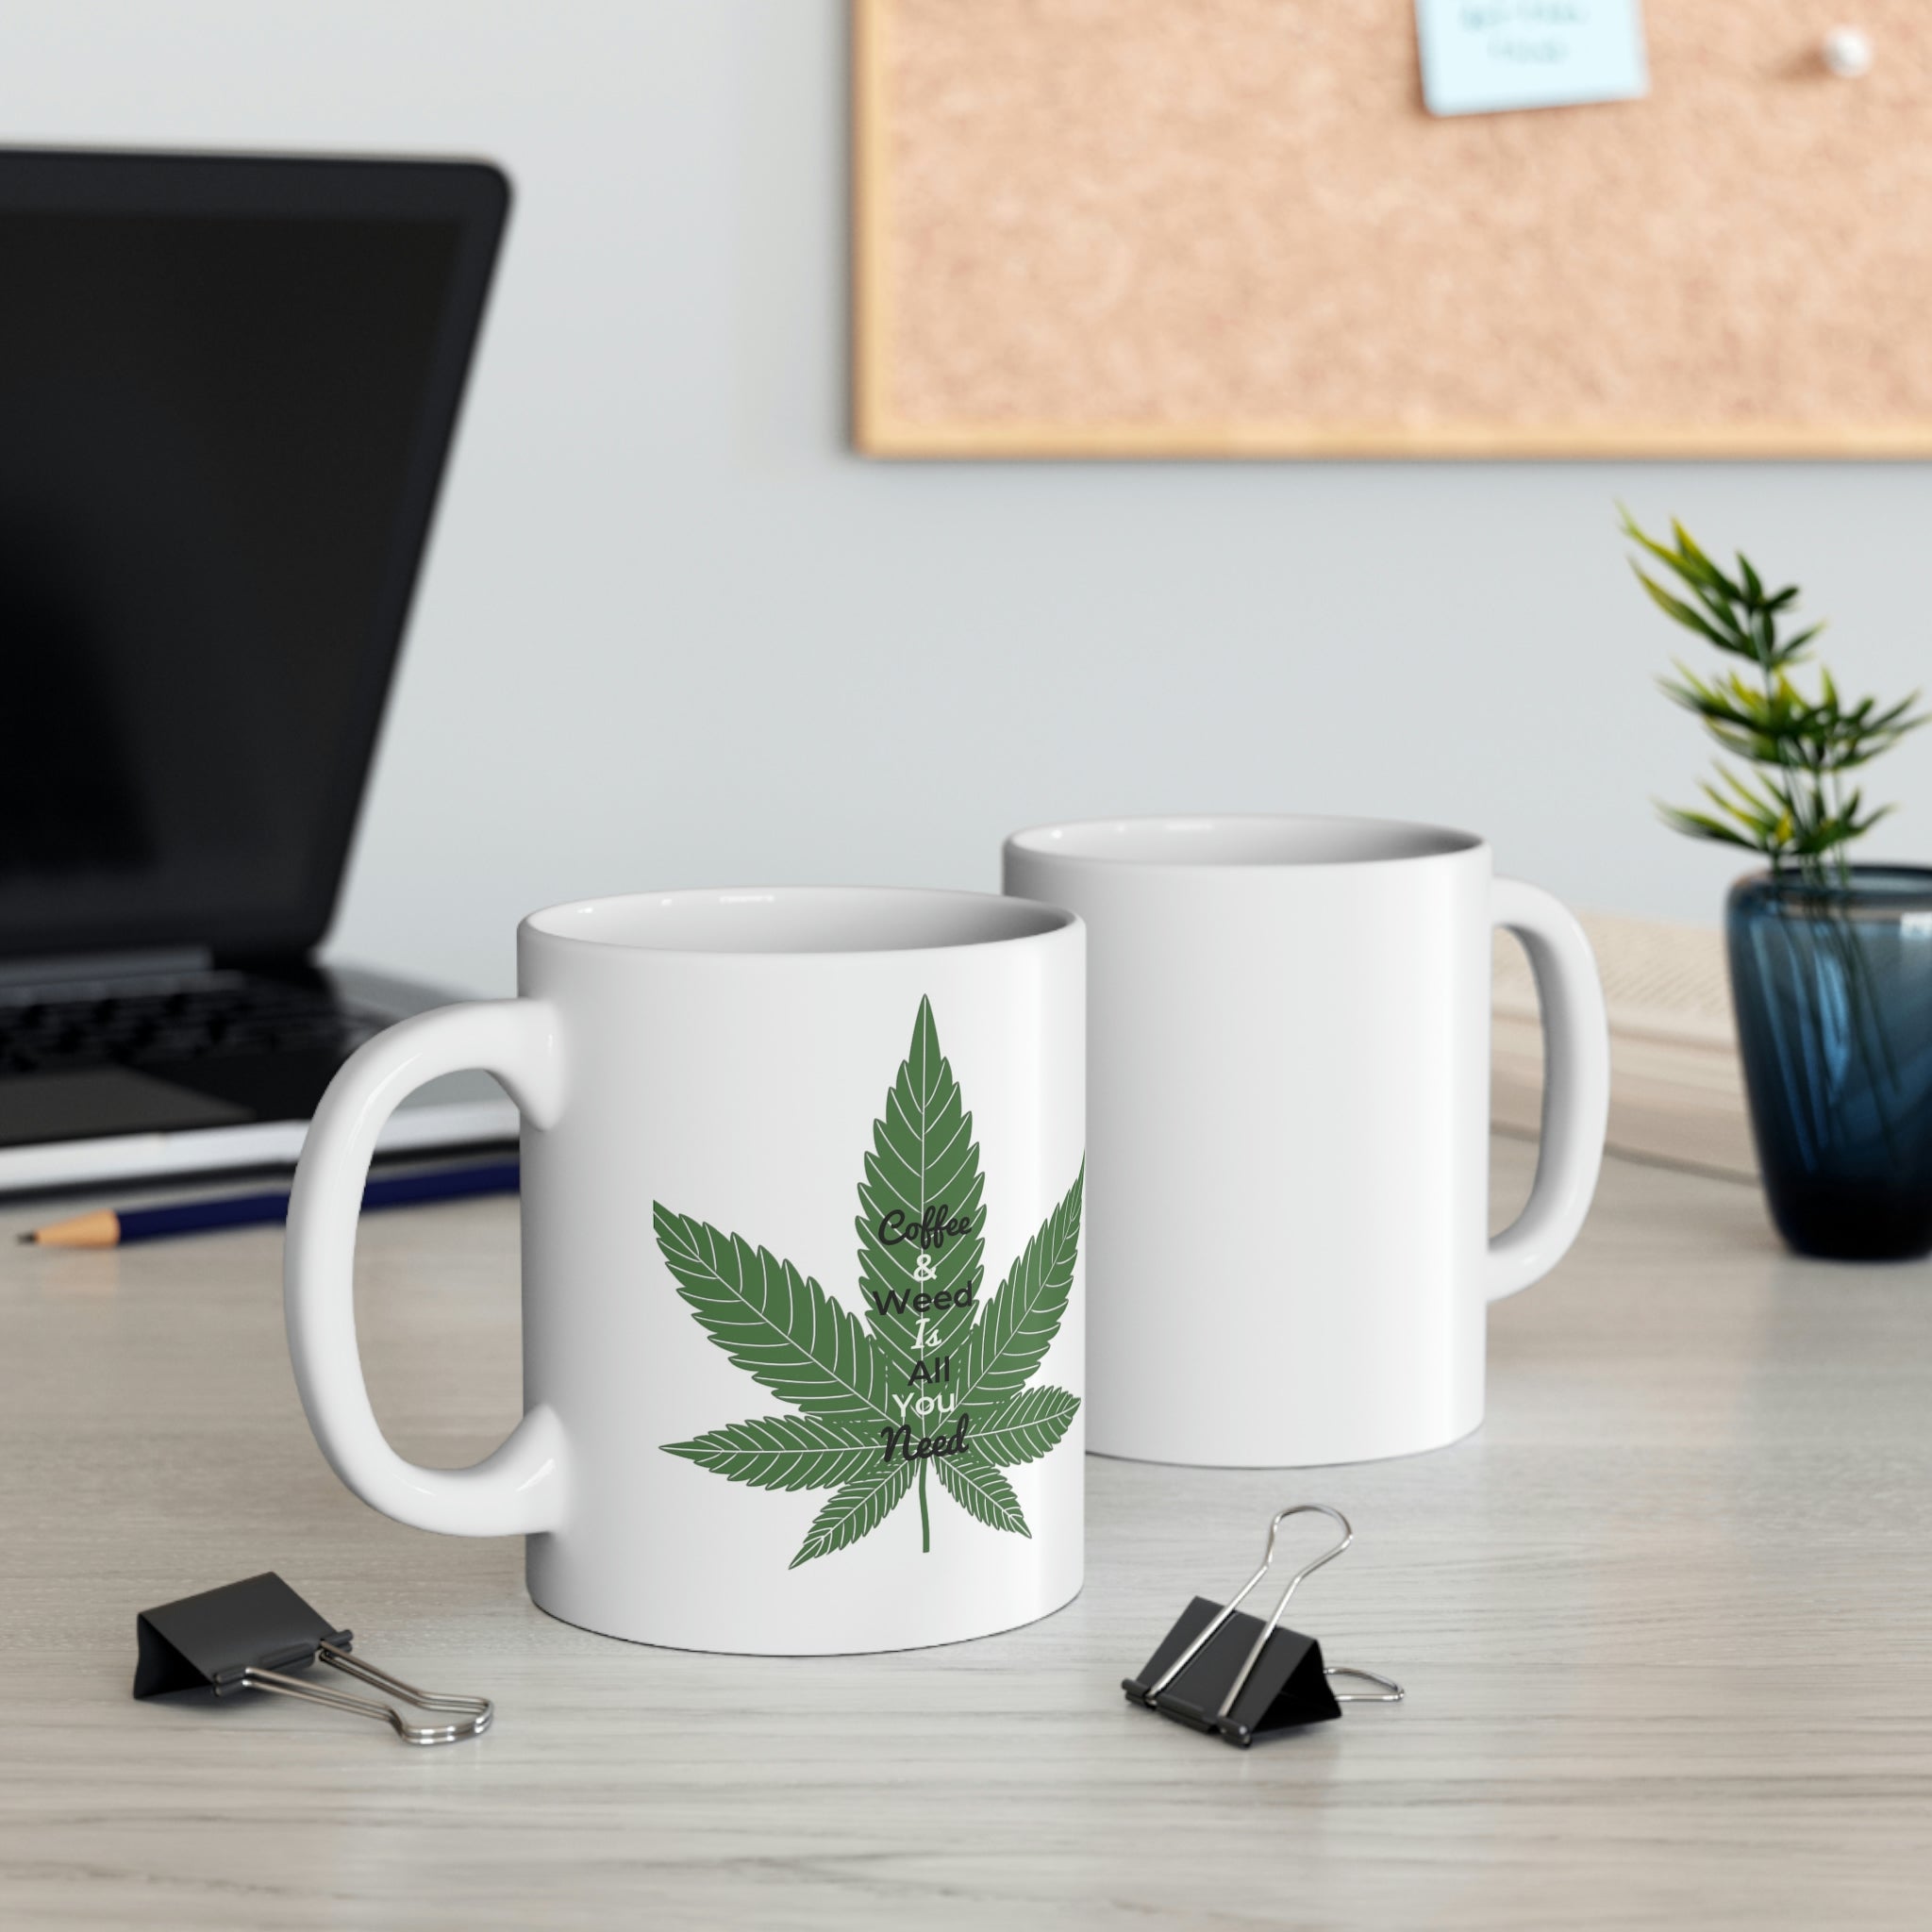 Coffee & Weed Ceramic Mug 11oz